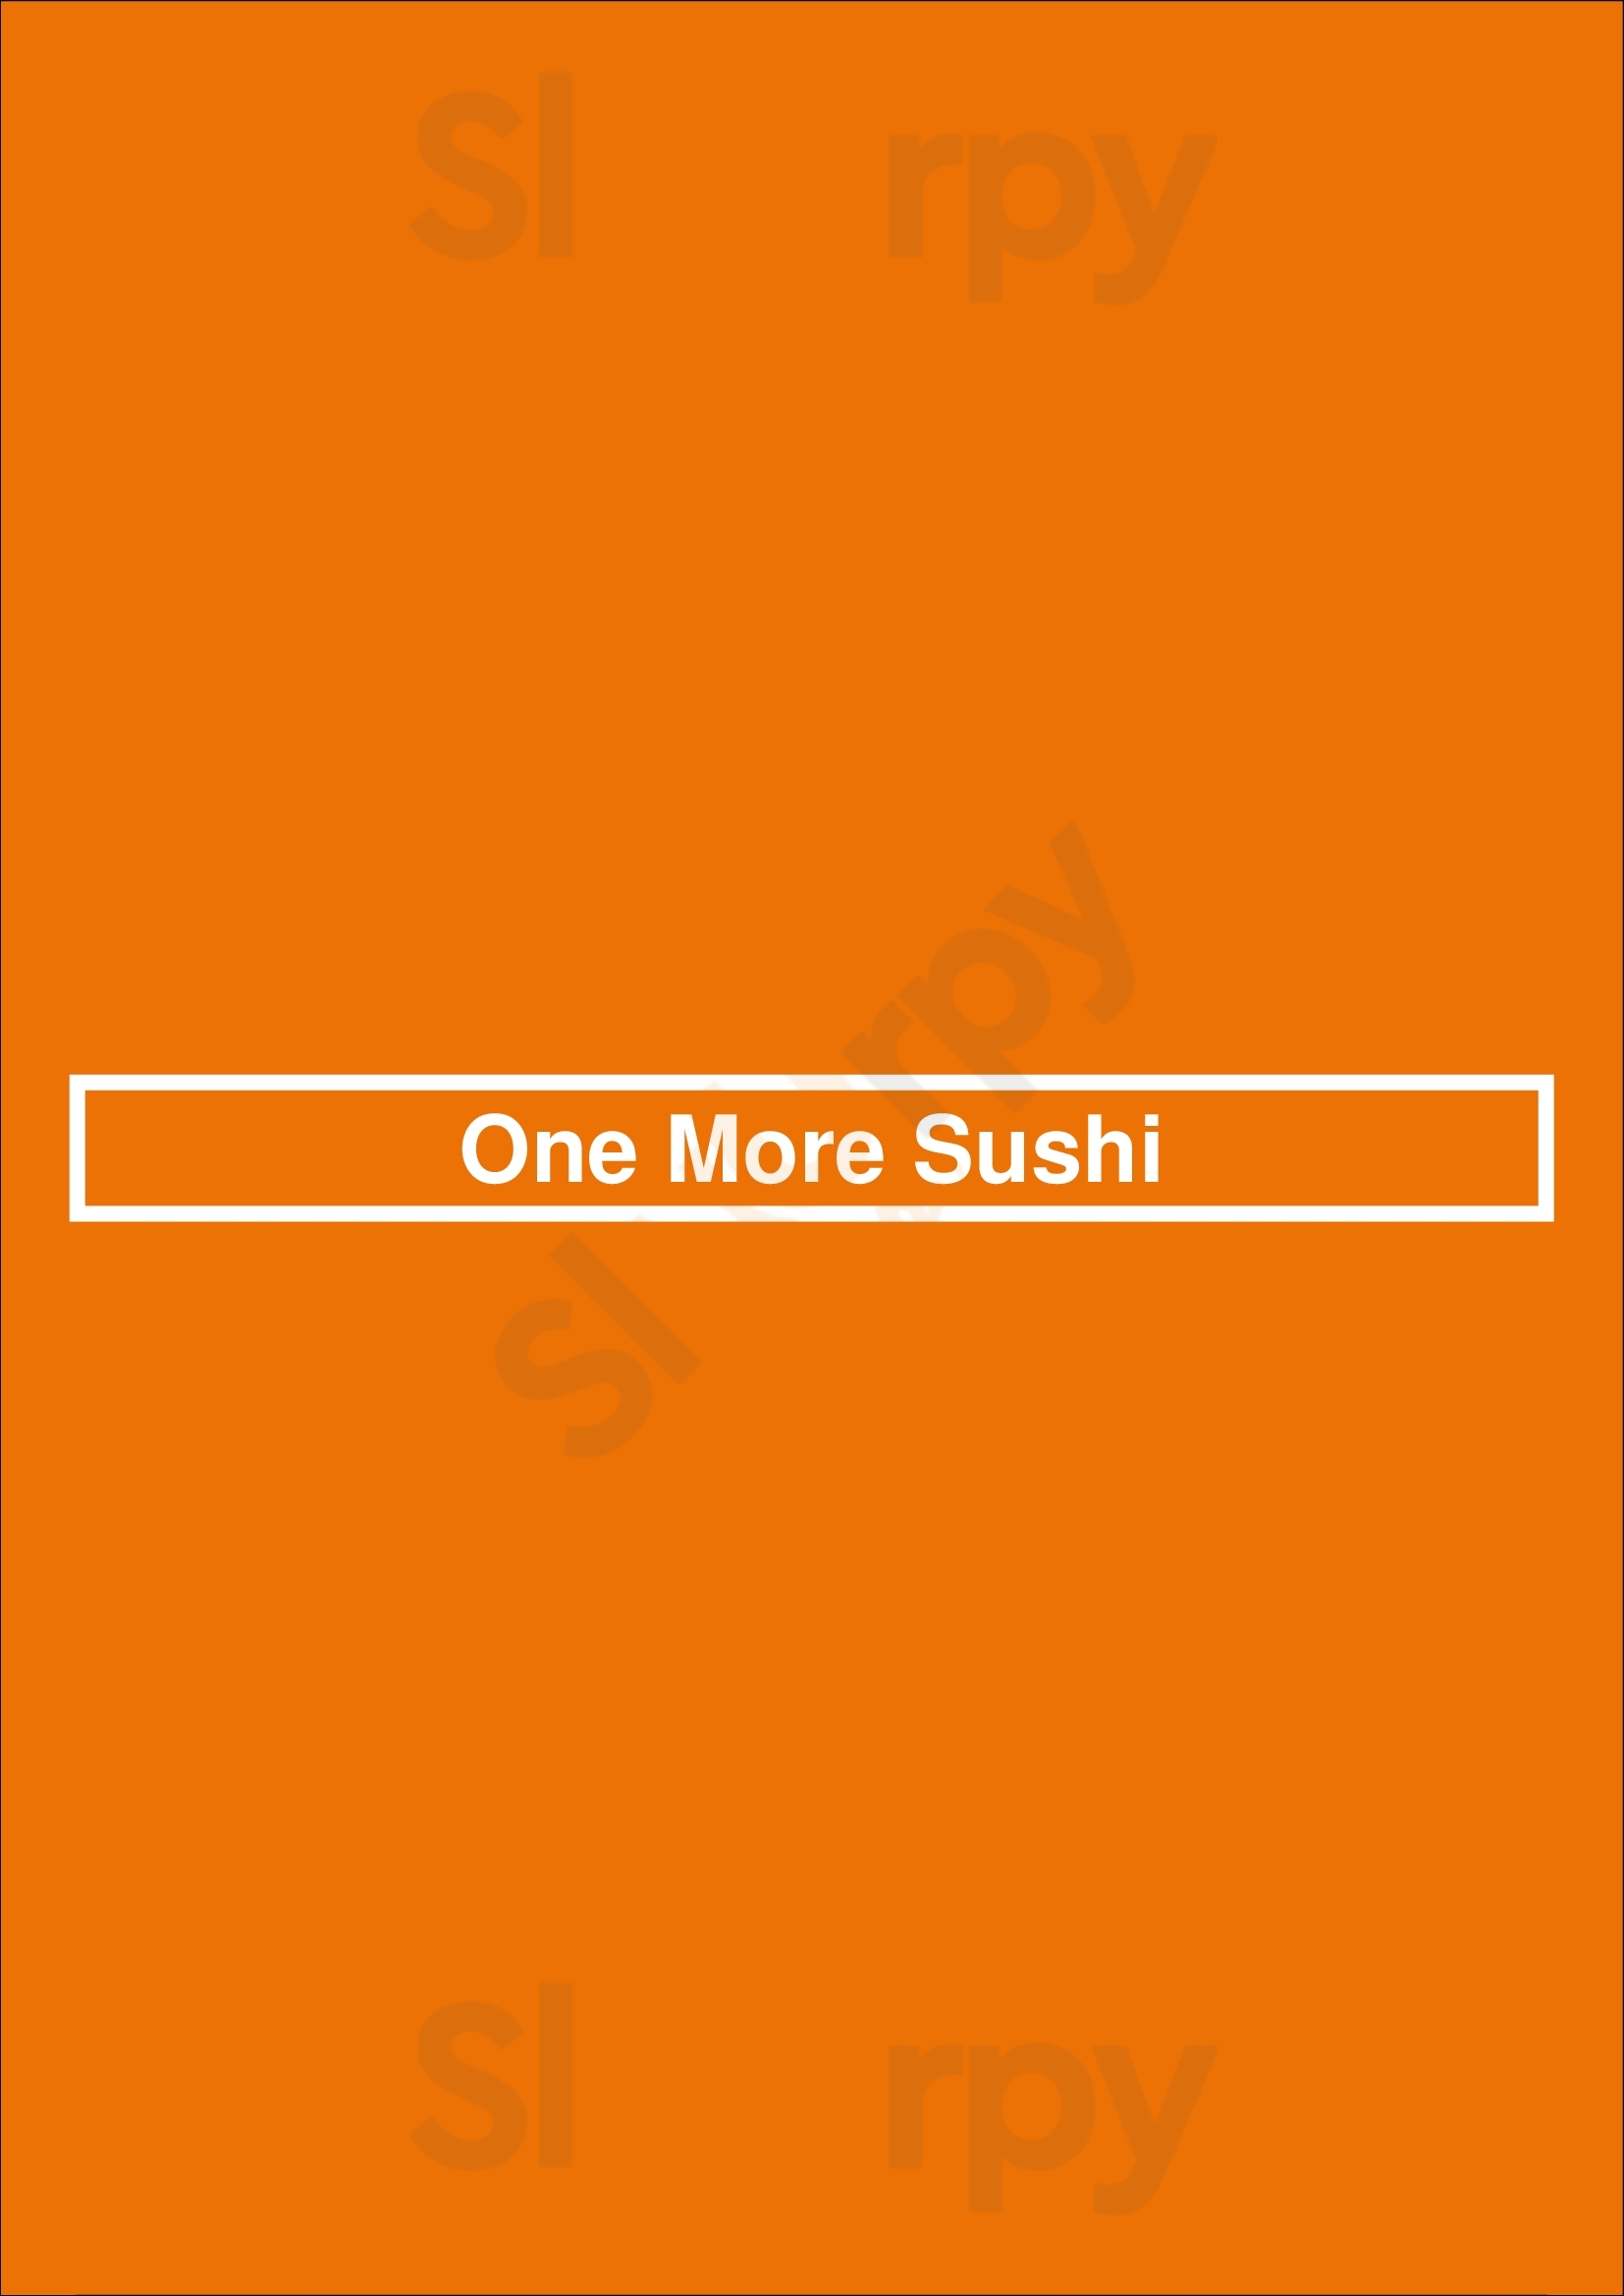 One More Sushi Vancouver Menu - 1